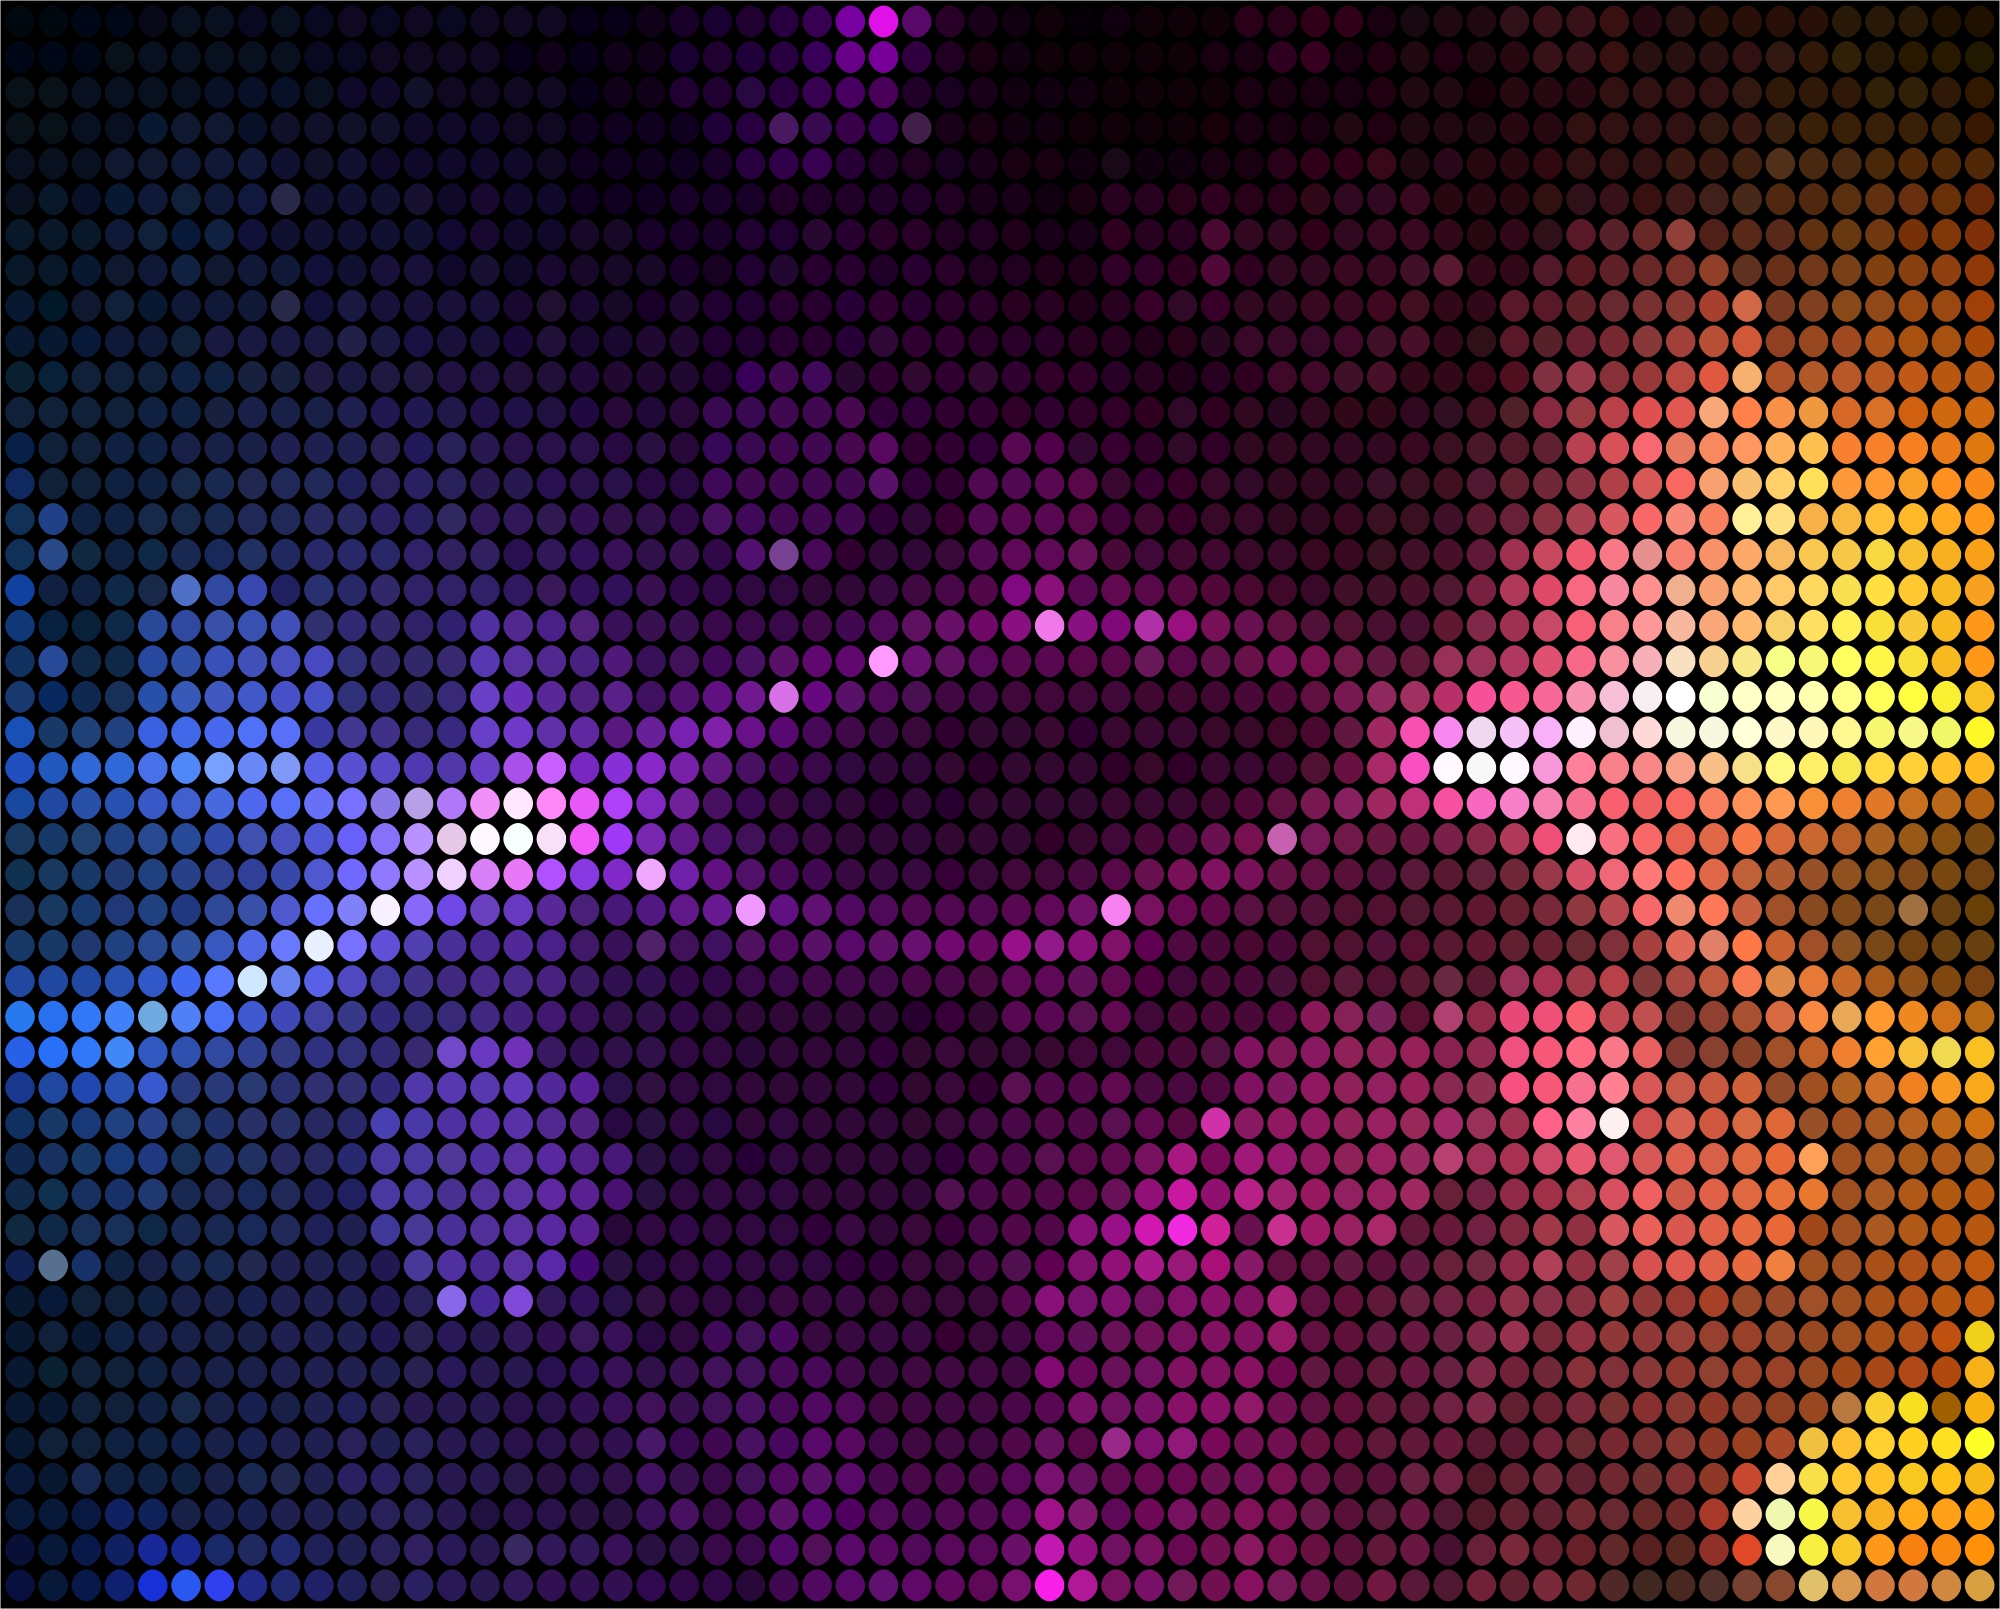 Brilliant neon color background image 09 vector Free Vector / 4Vector